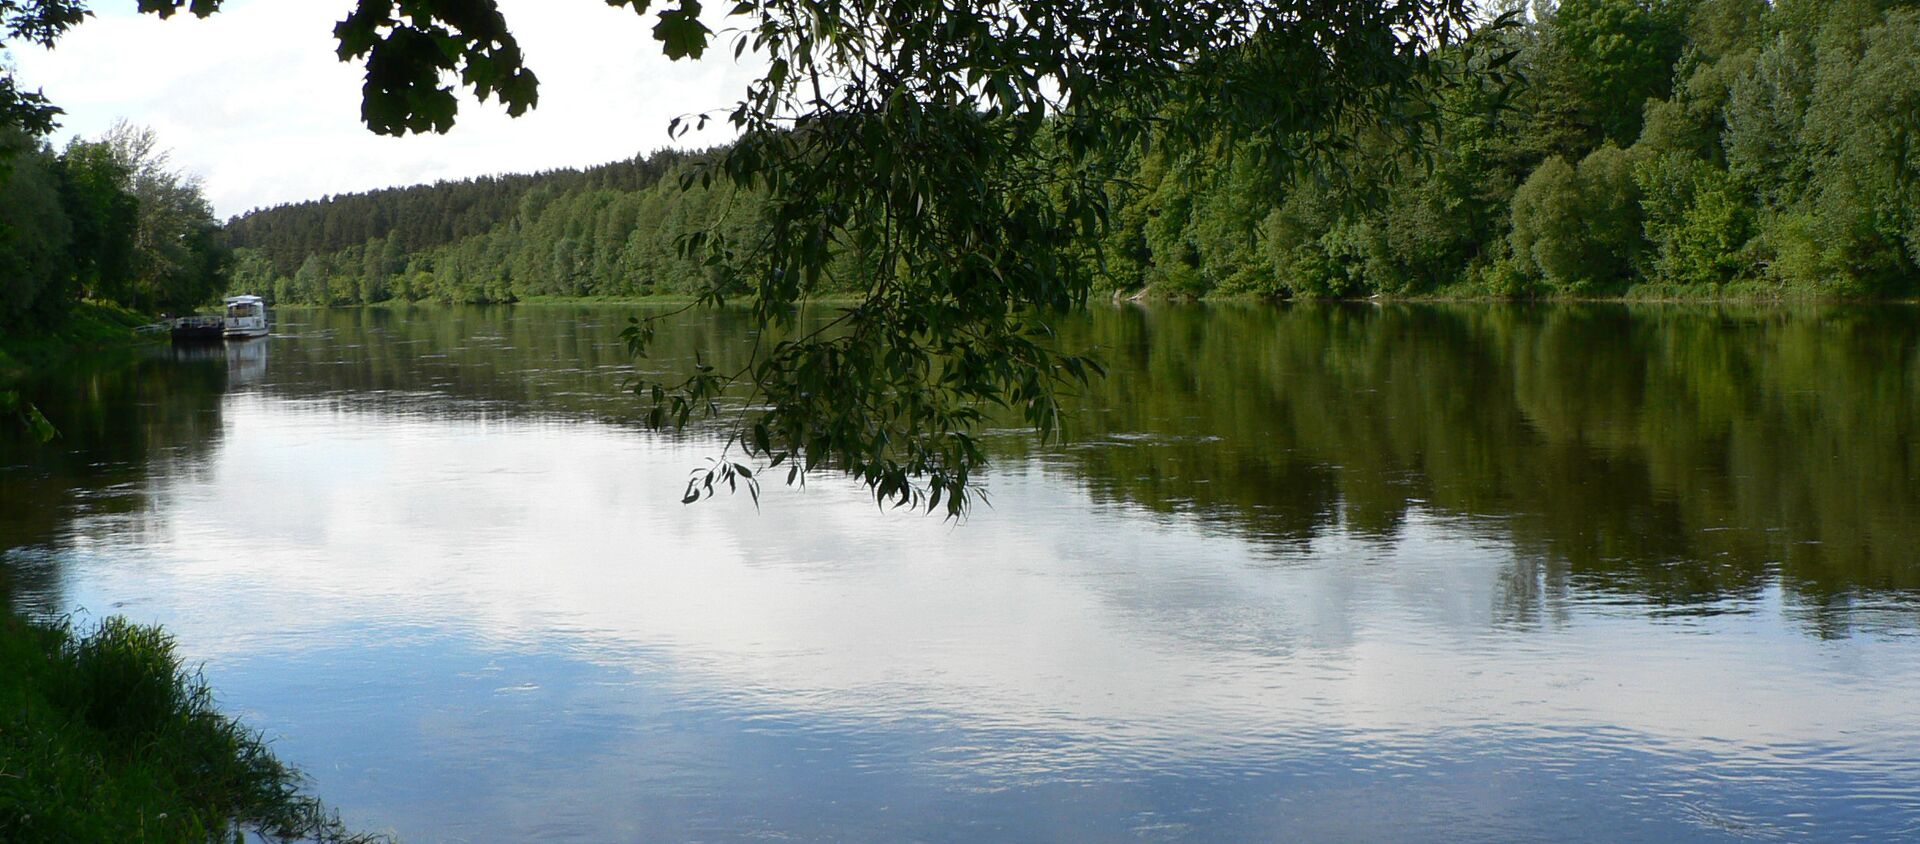 Река Неман, архивное фото - Sputnik Литва, 1920, 22.04.2021